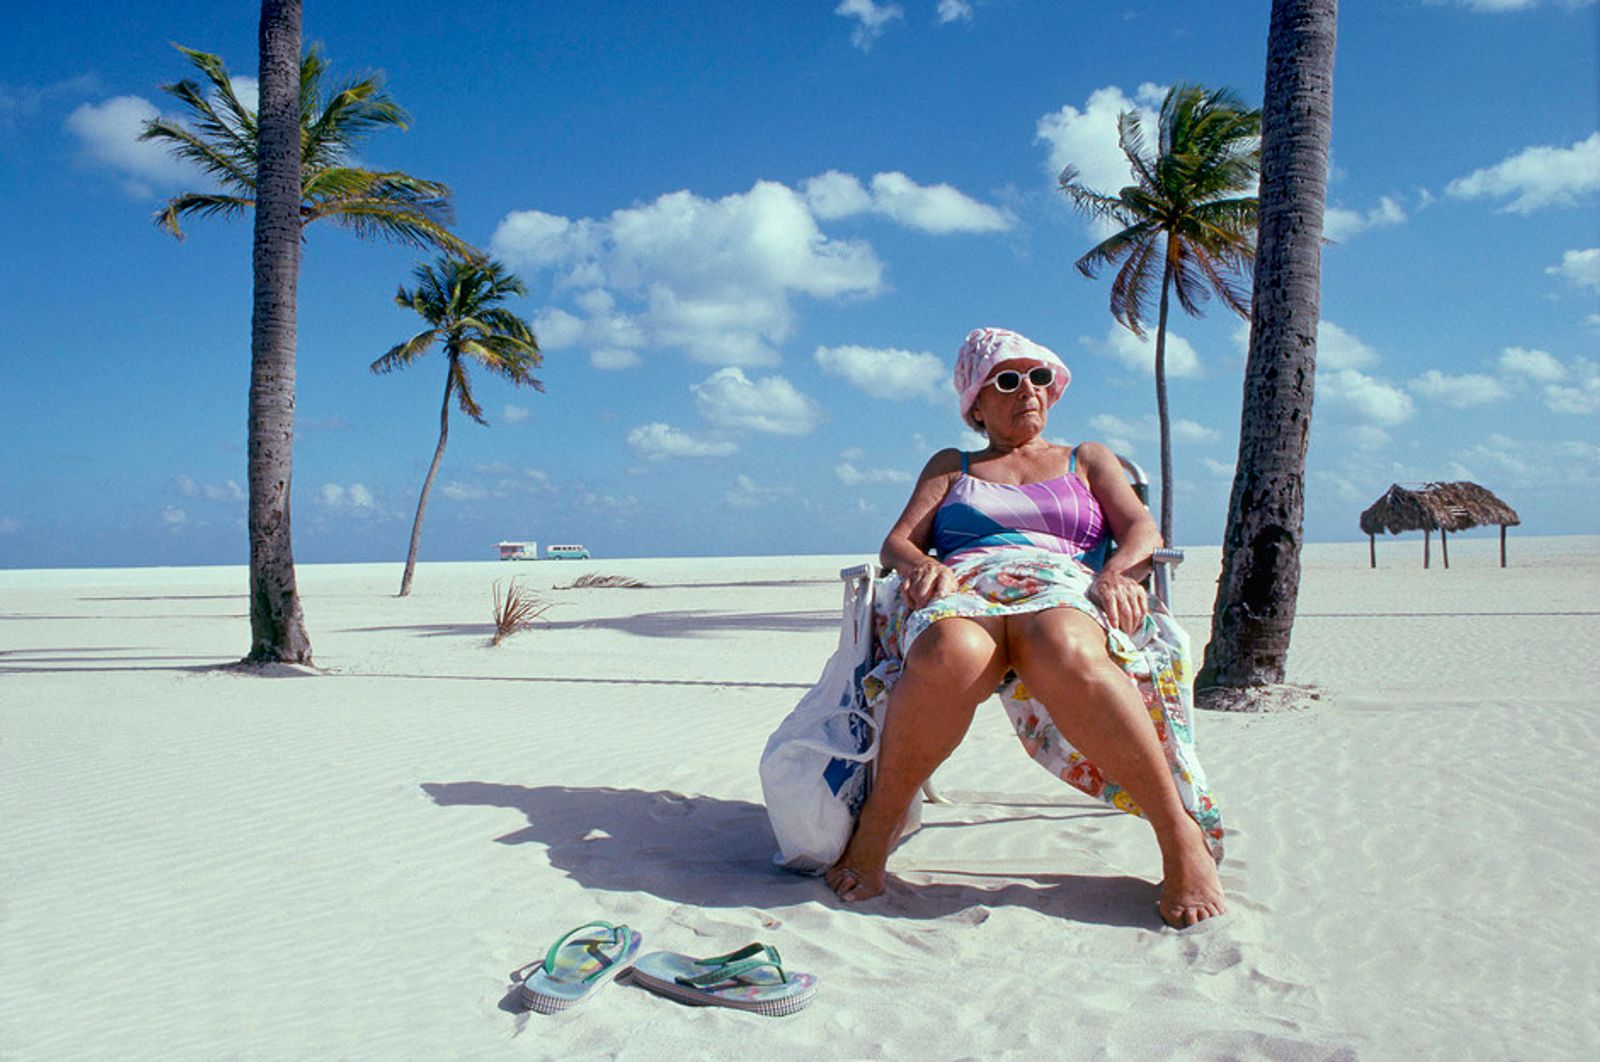 © Steven Edson - Old lady sitting on South Beach, Miami, FL